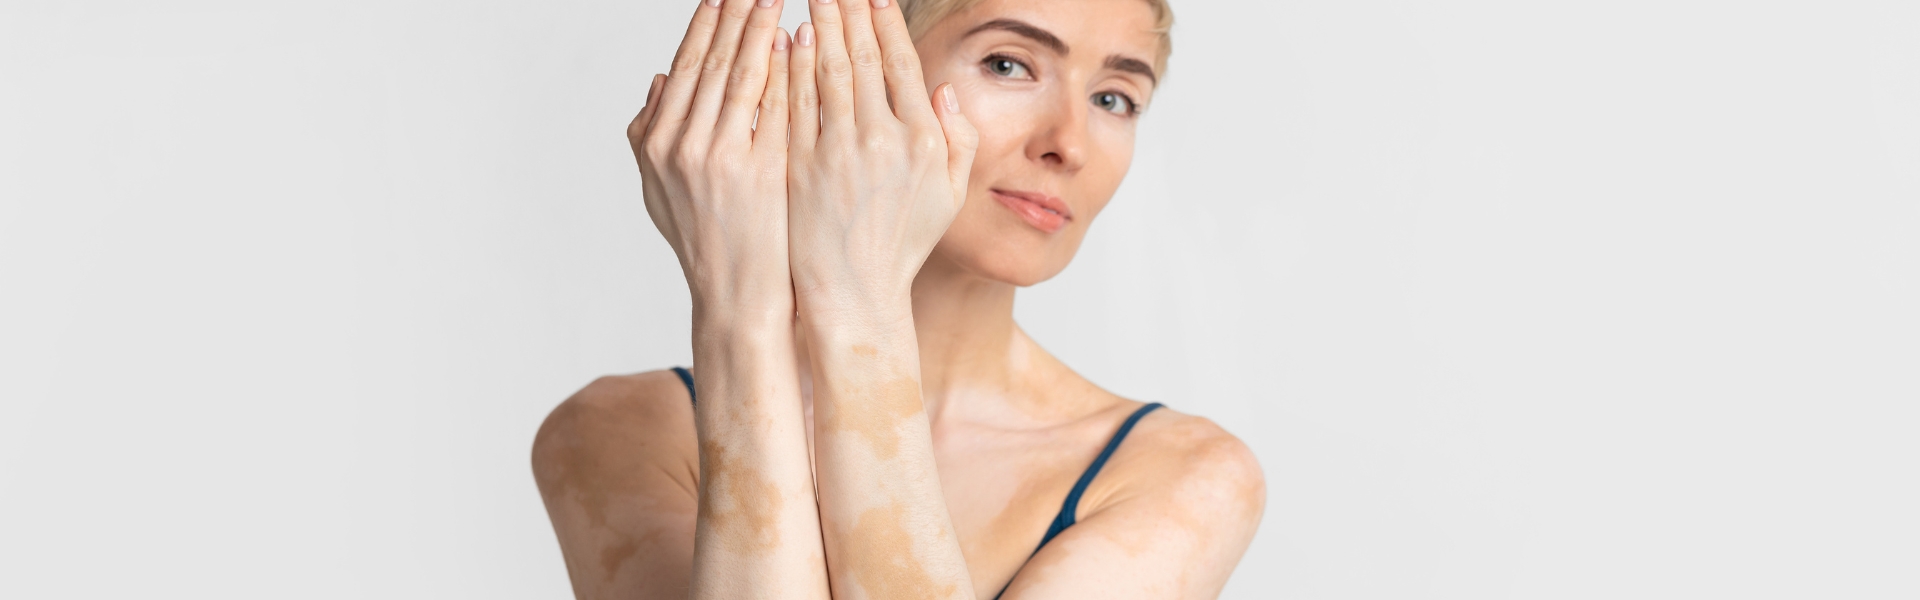 Vitiligo Treatment in Homeopathy